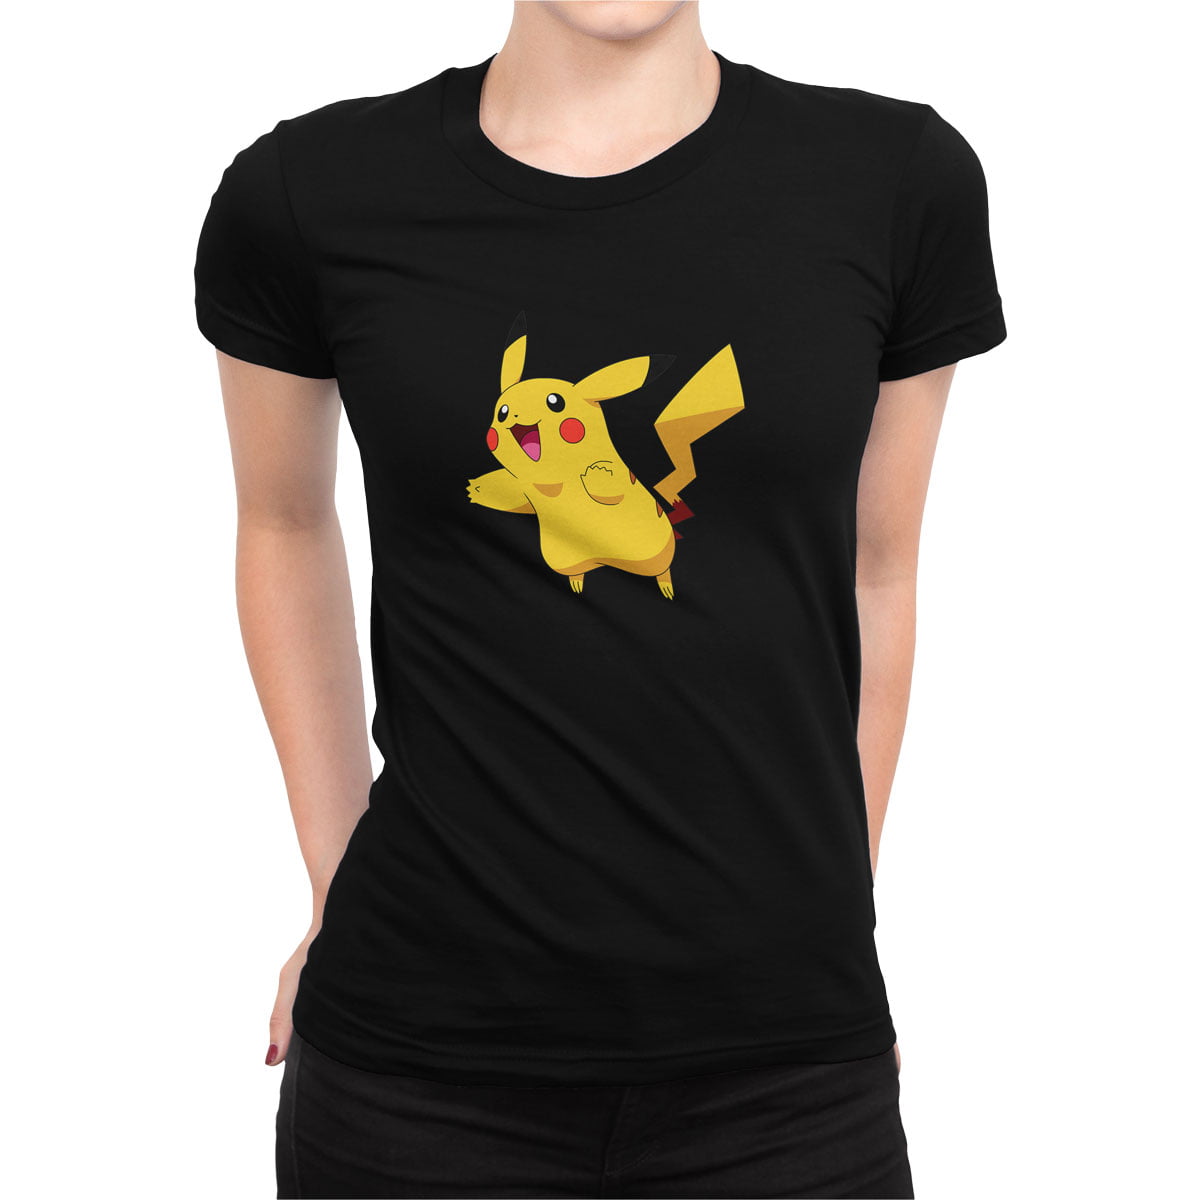 Pokemon go pikachu tisort kadin s - pokemon go pikachu kadın t-shirt - figurex